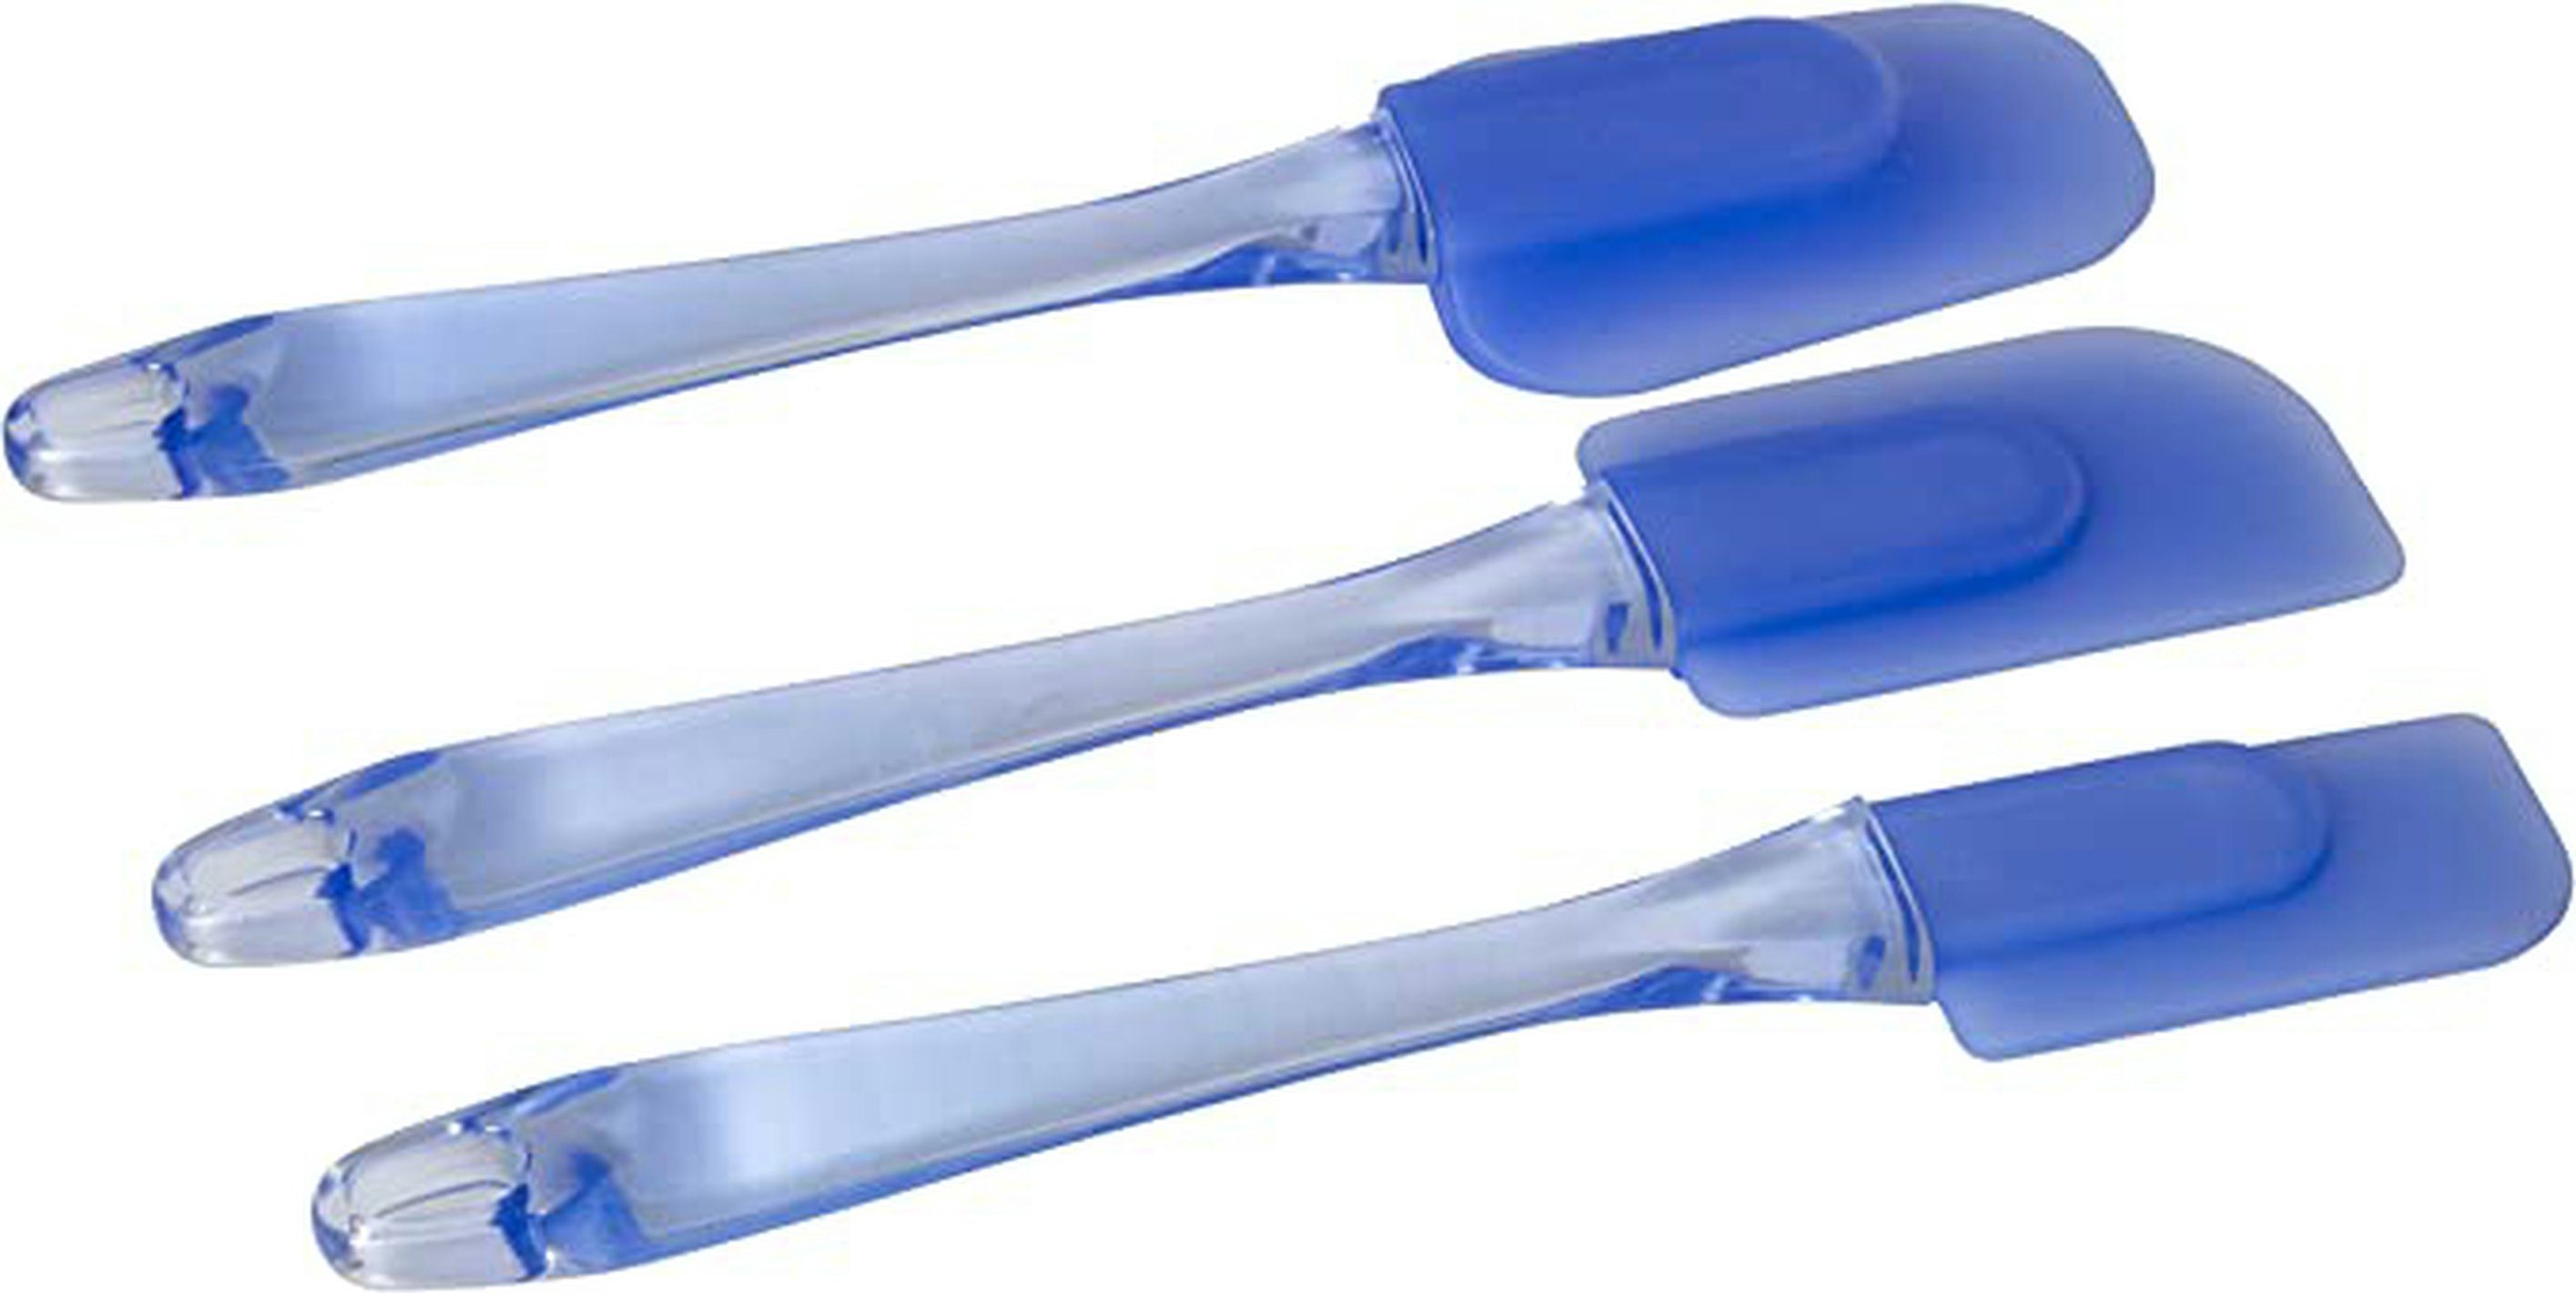 RUBBERNECK Teigspachtel Teigspachtel aus Silikon in blau, 3-teilig im Set, Spülmaschinenfest, lebensmittelecht, BPA-frei, langlebig | Teigschaber